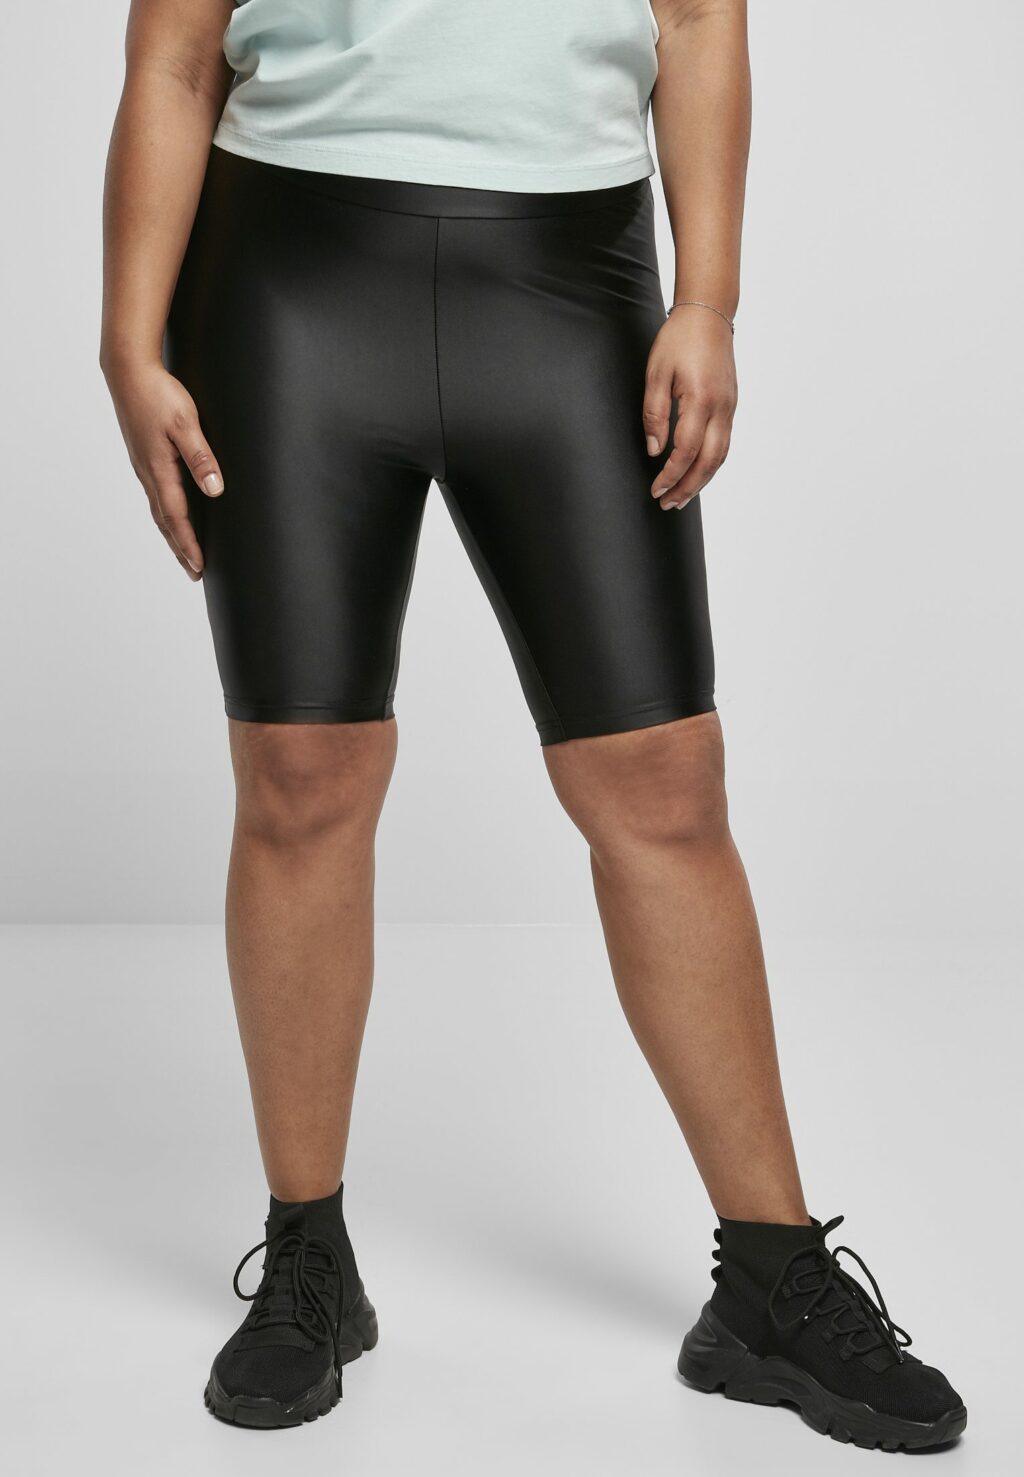 Urban Classics Ladies Highwaist Shiny Metallic Cycle Shorts black TB4342